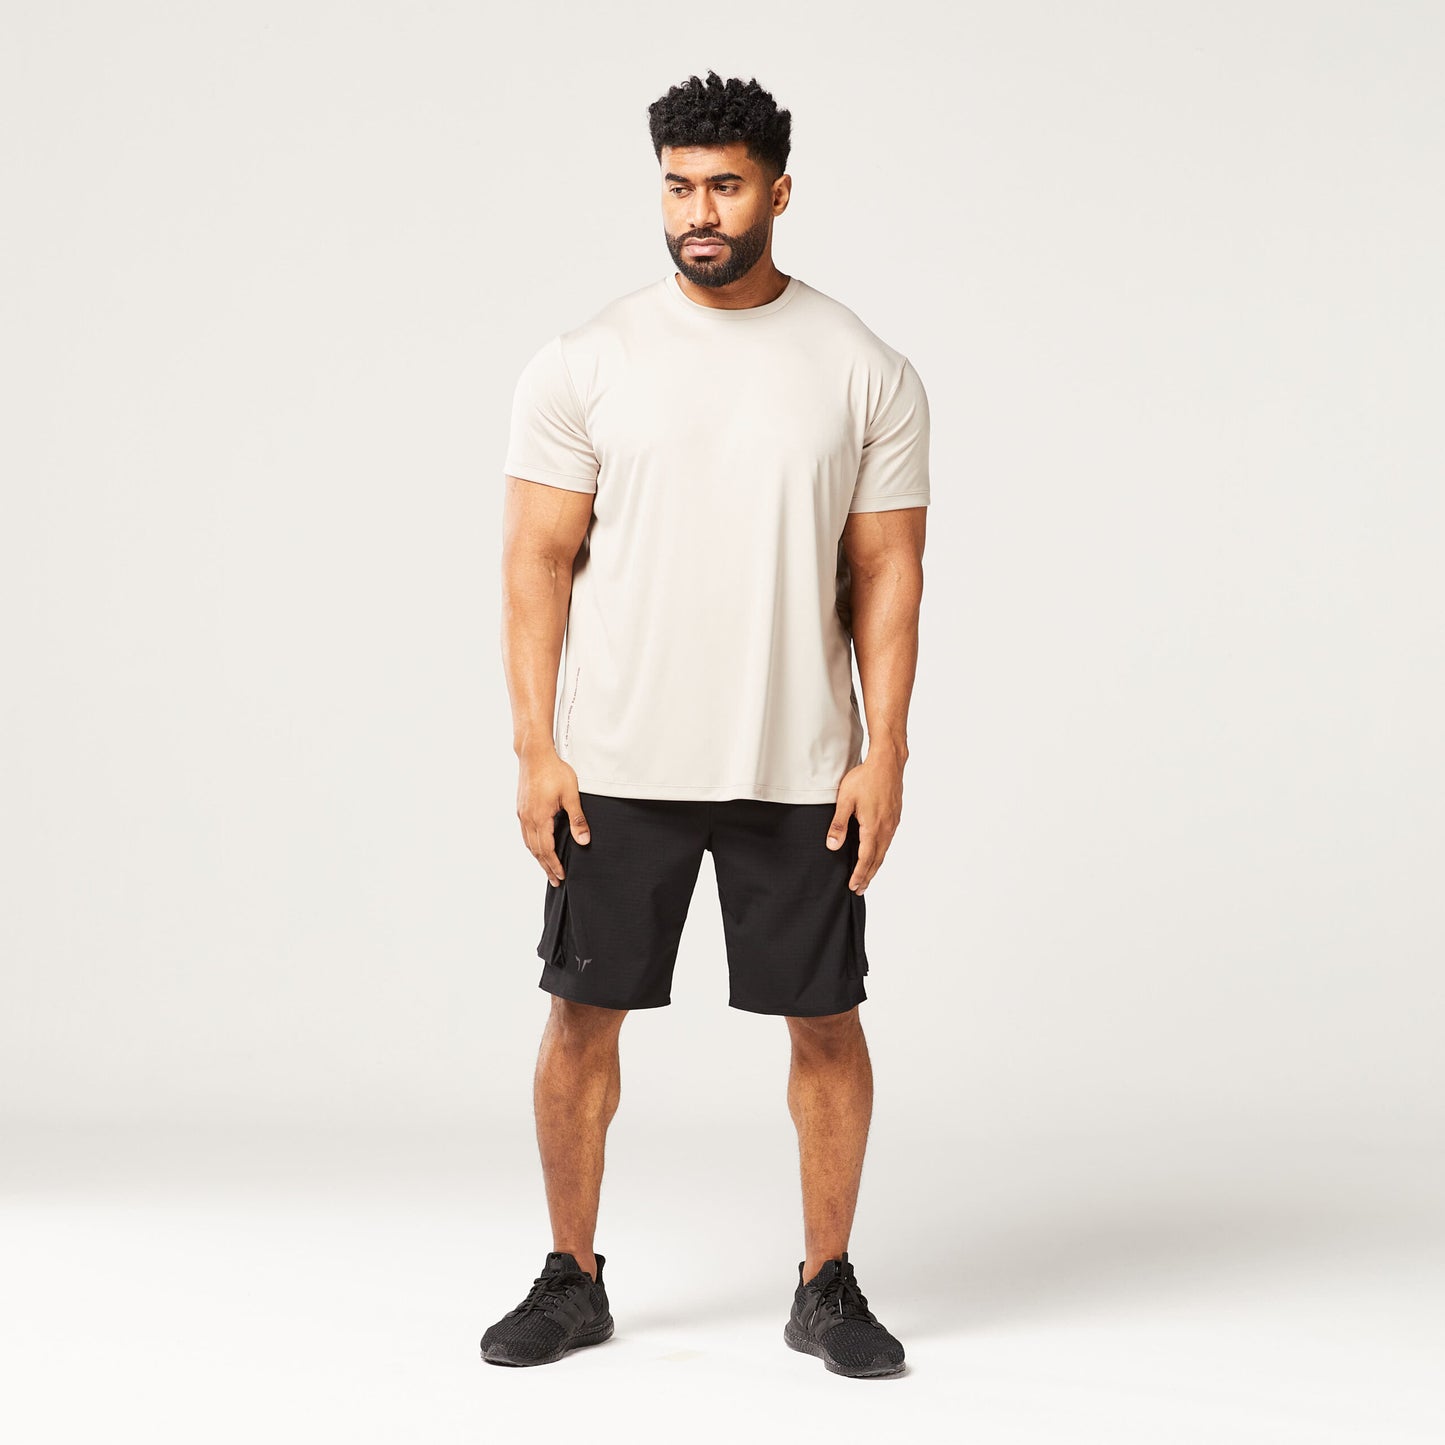 squatwolf-gym-wear-code-urban-tee-cobblestone-workout-shirts-for-men